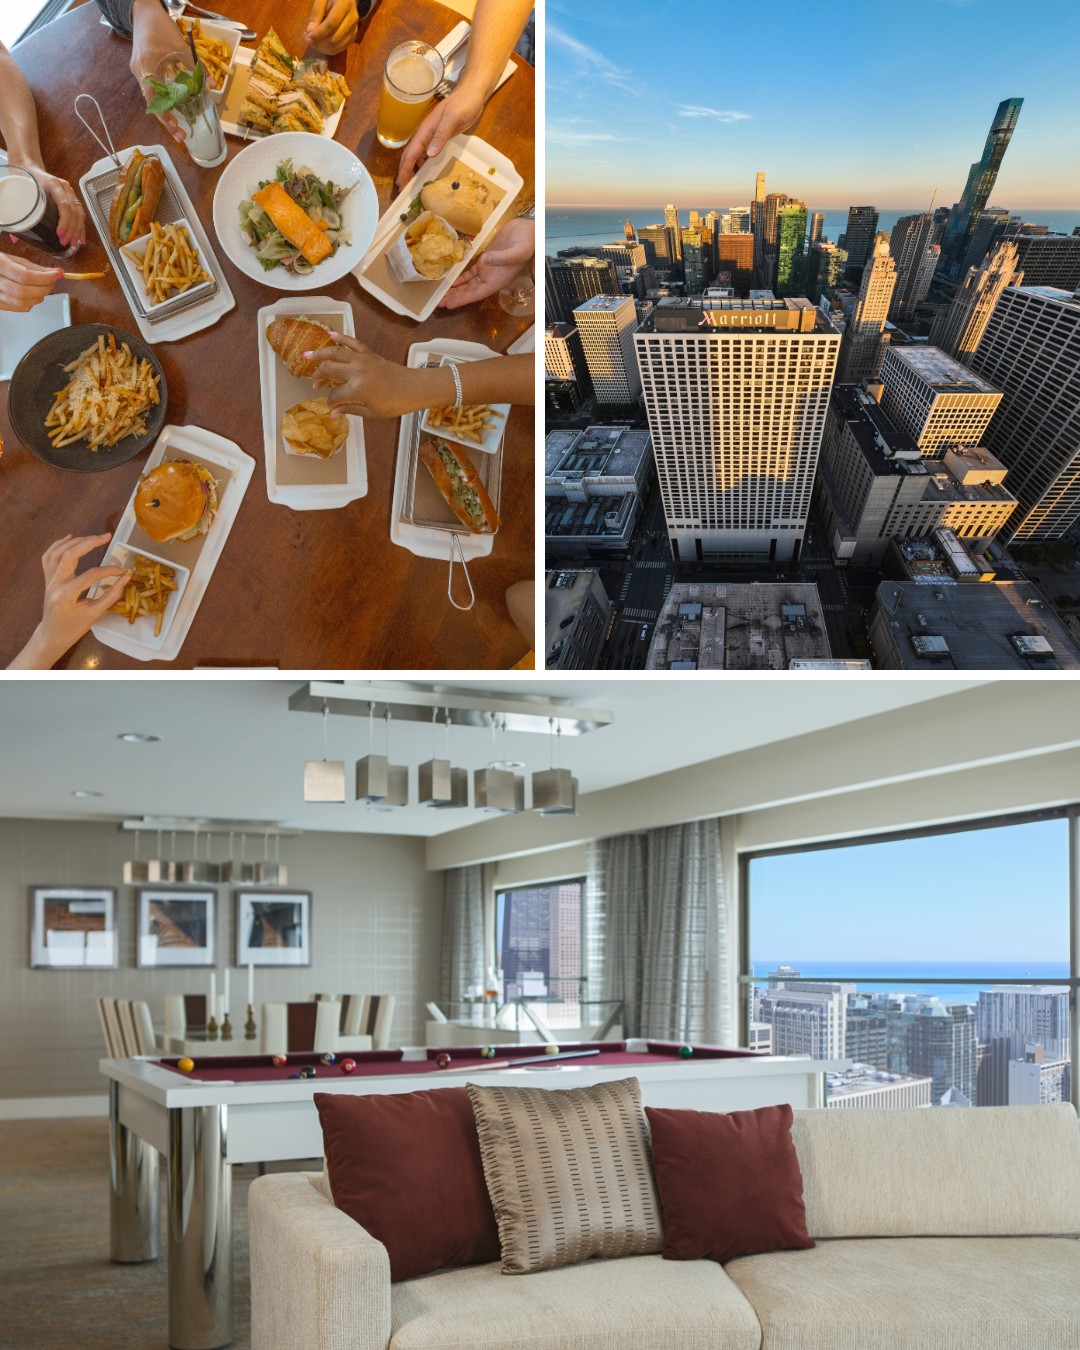 American food spread, Chicago Marriott aerial, hotel room interior